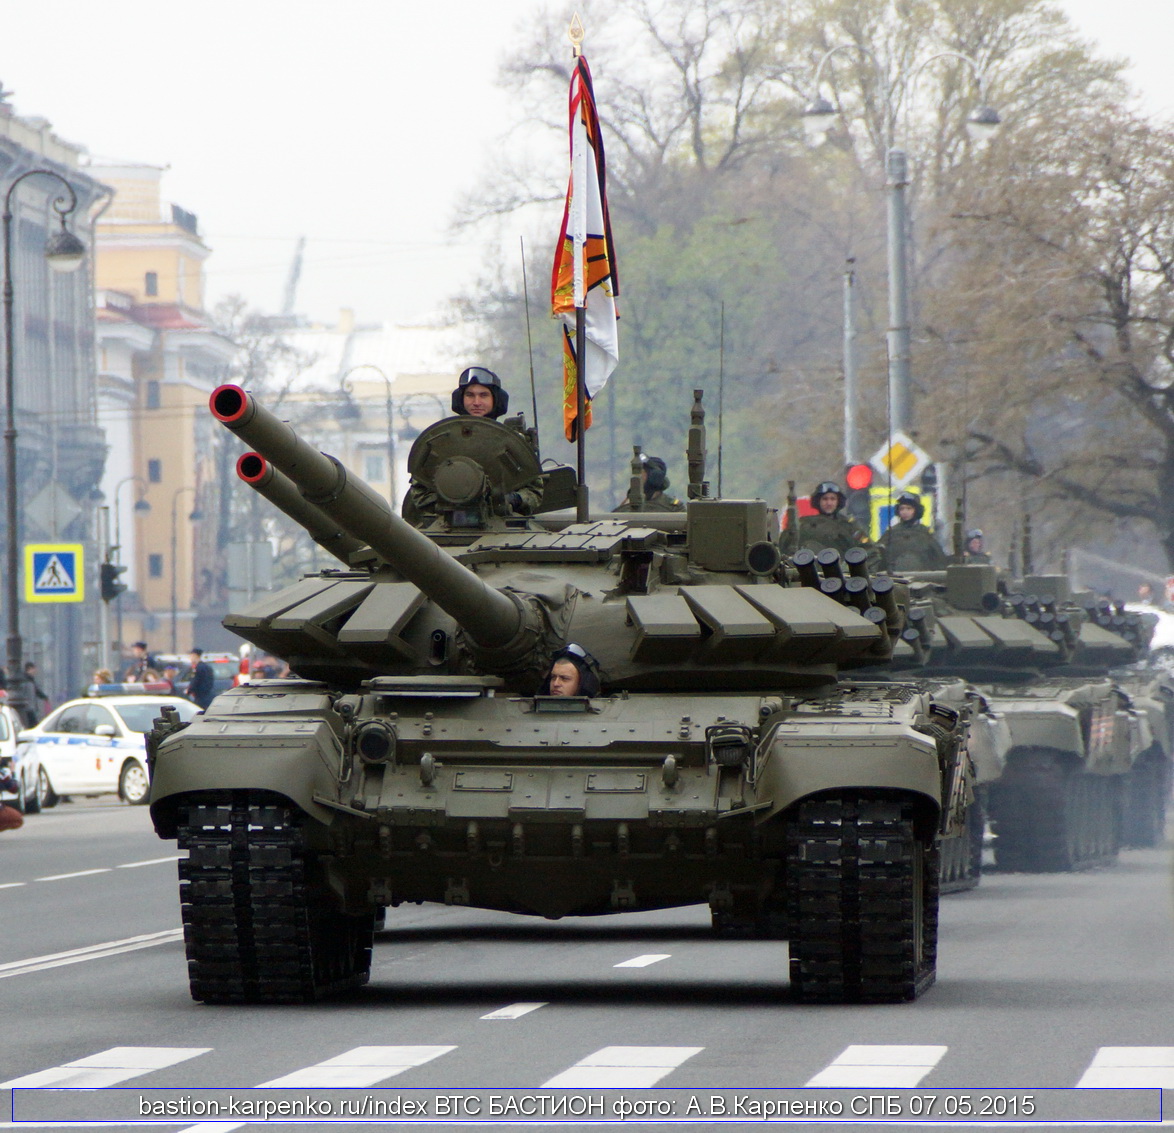 T-72B3 on parade